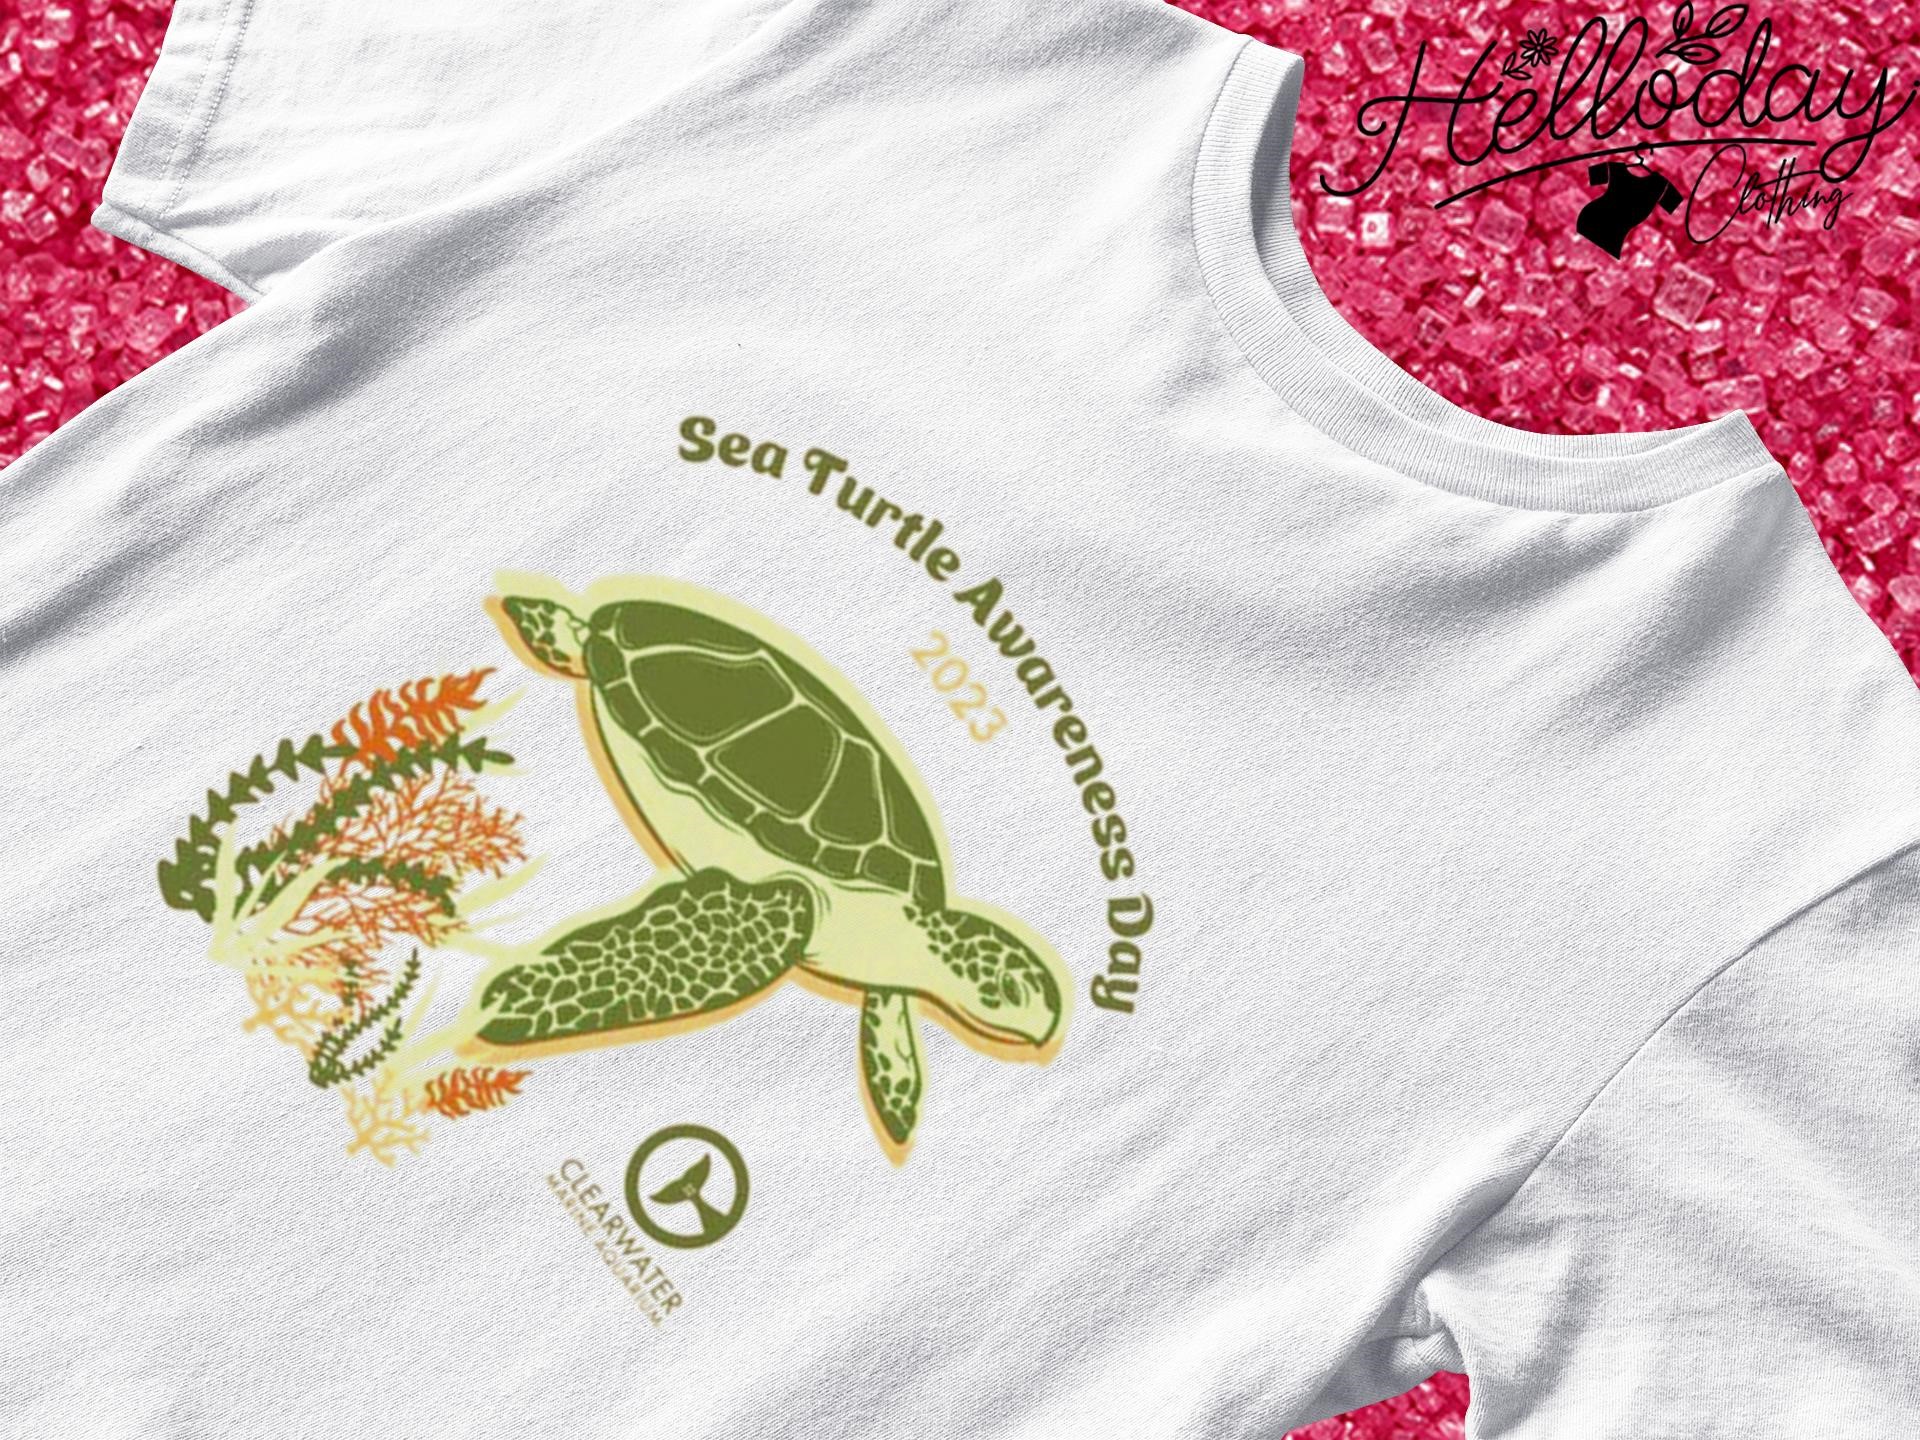 Sea turtle awareness day 2023 shirt